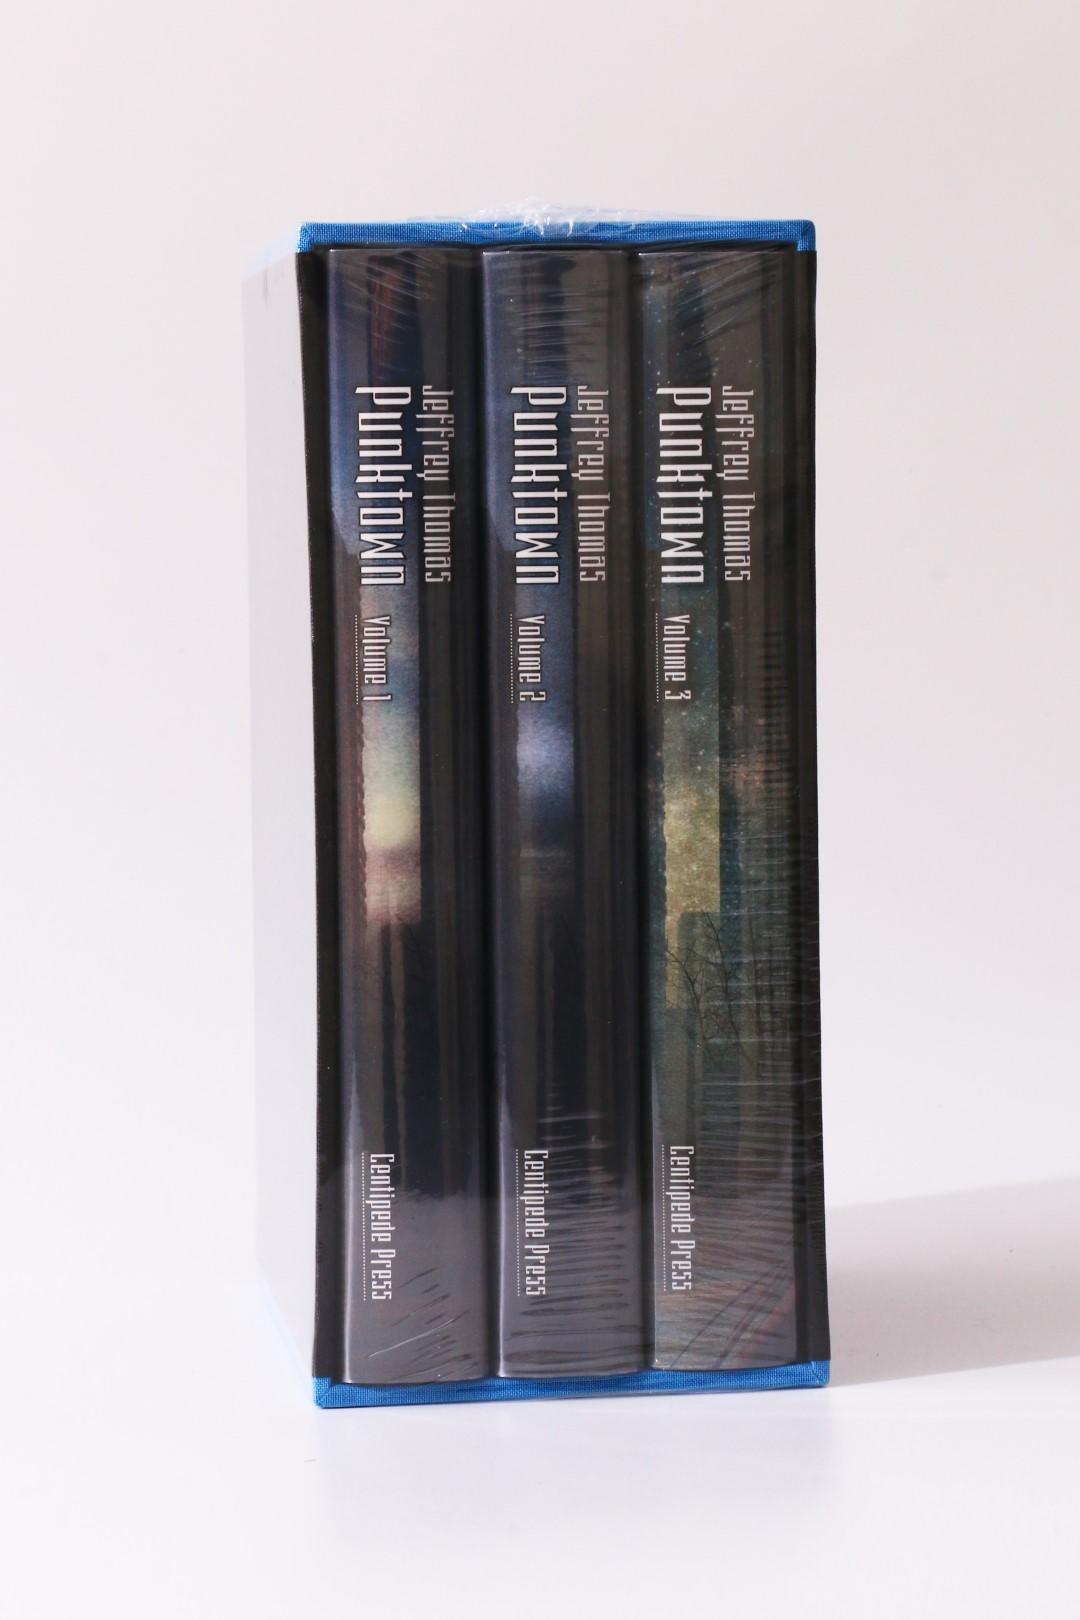 Jeffrey Thomas - Punktown - Centipede Press, 2021, Signed Limited Edition.